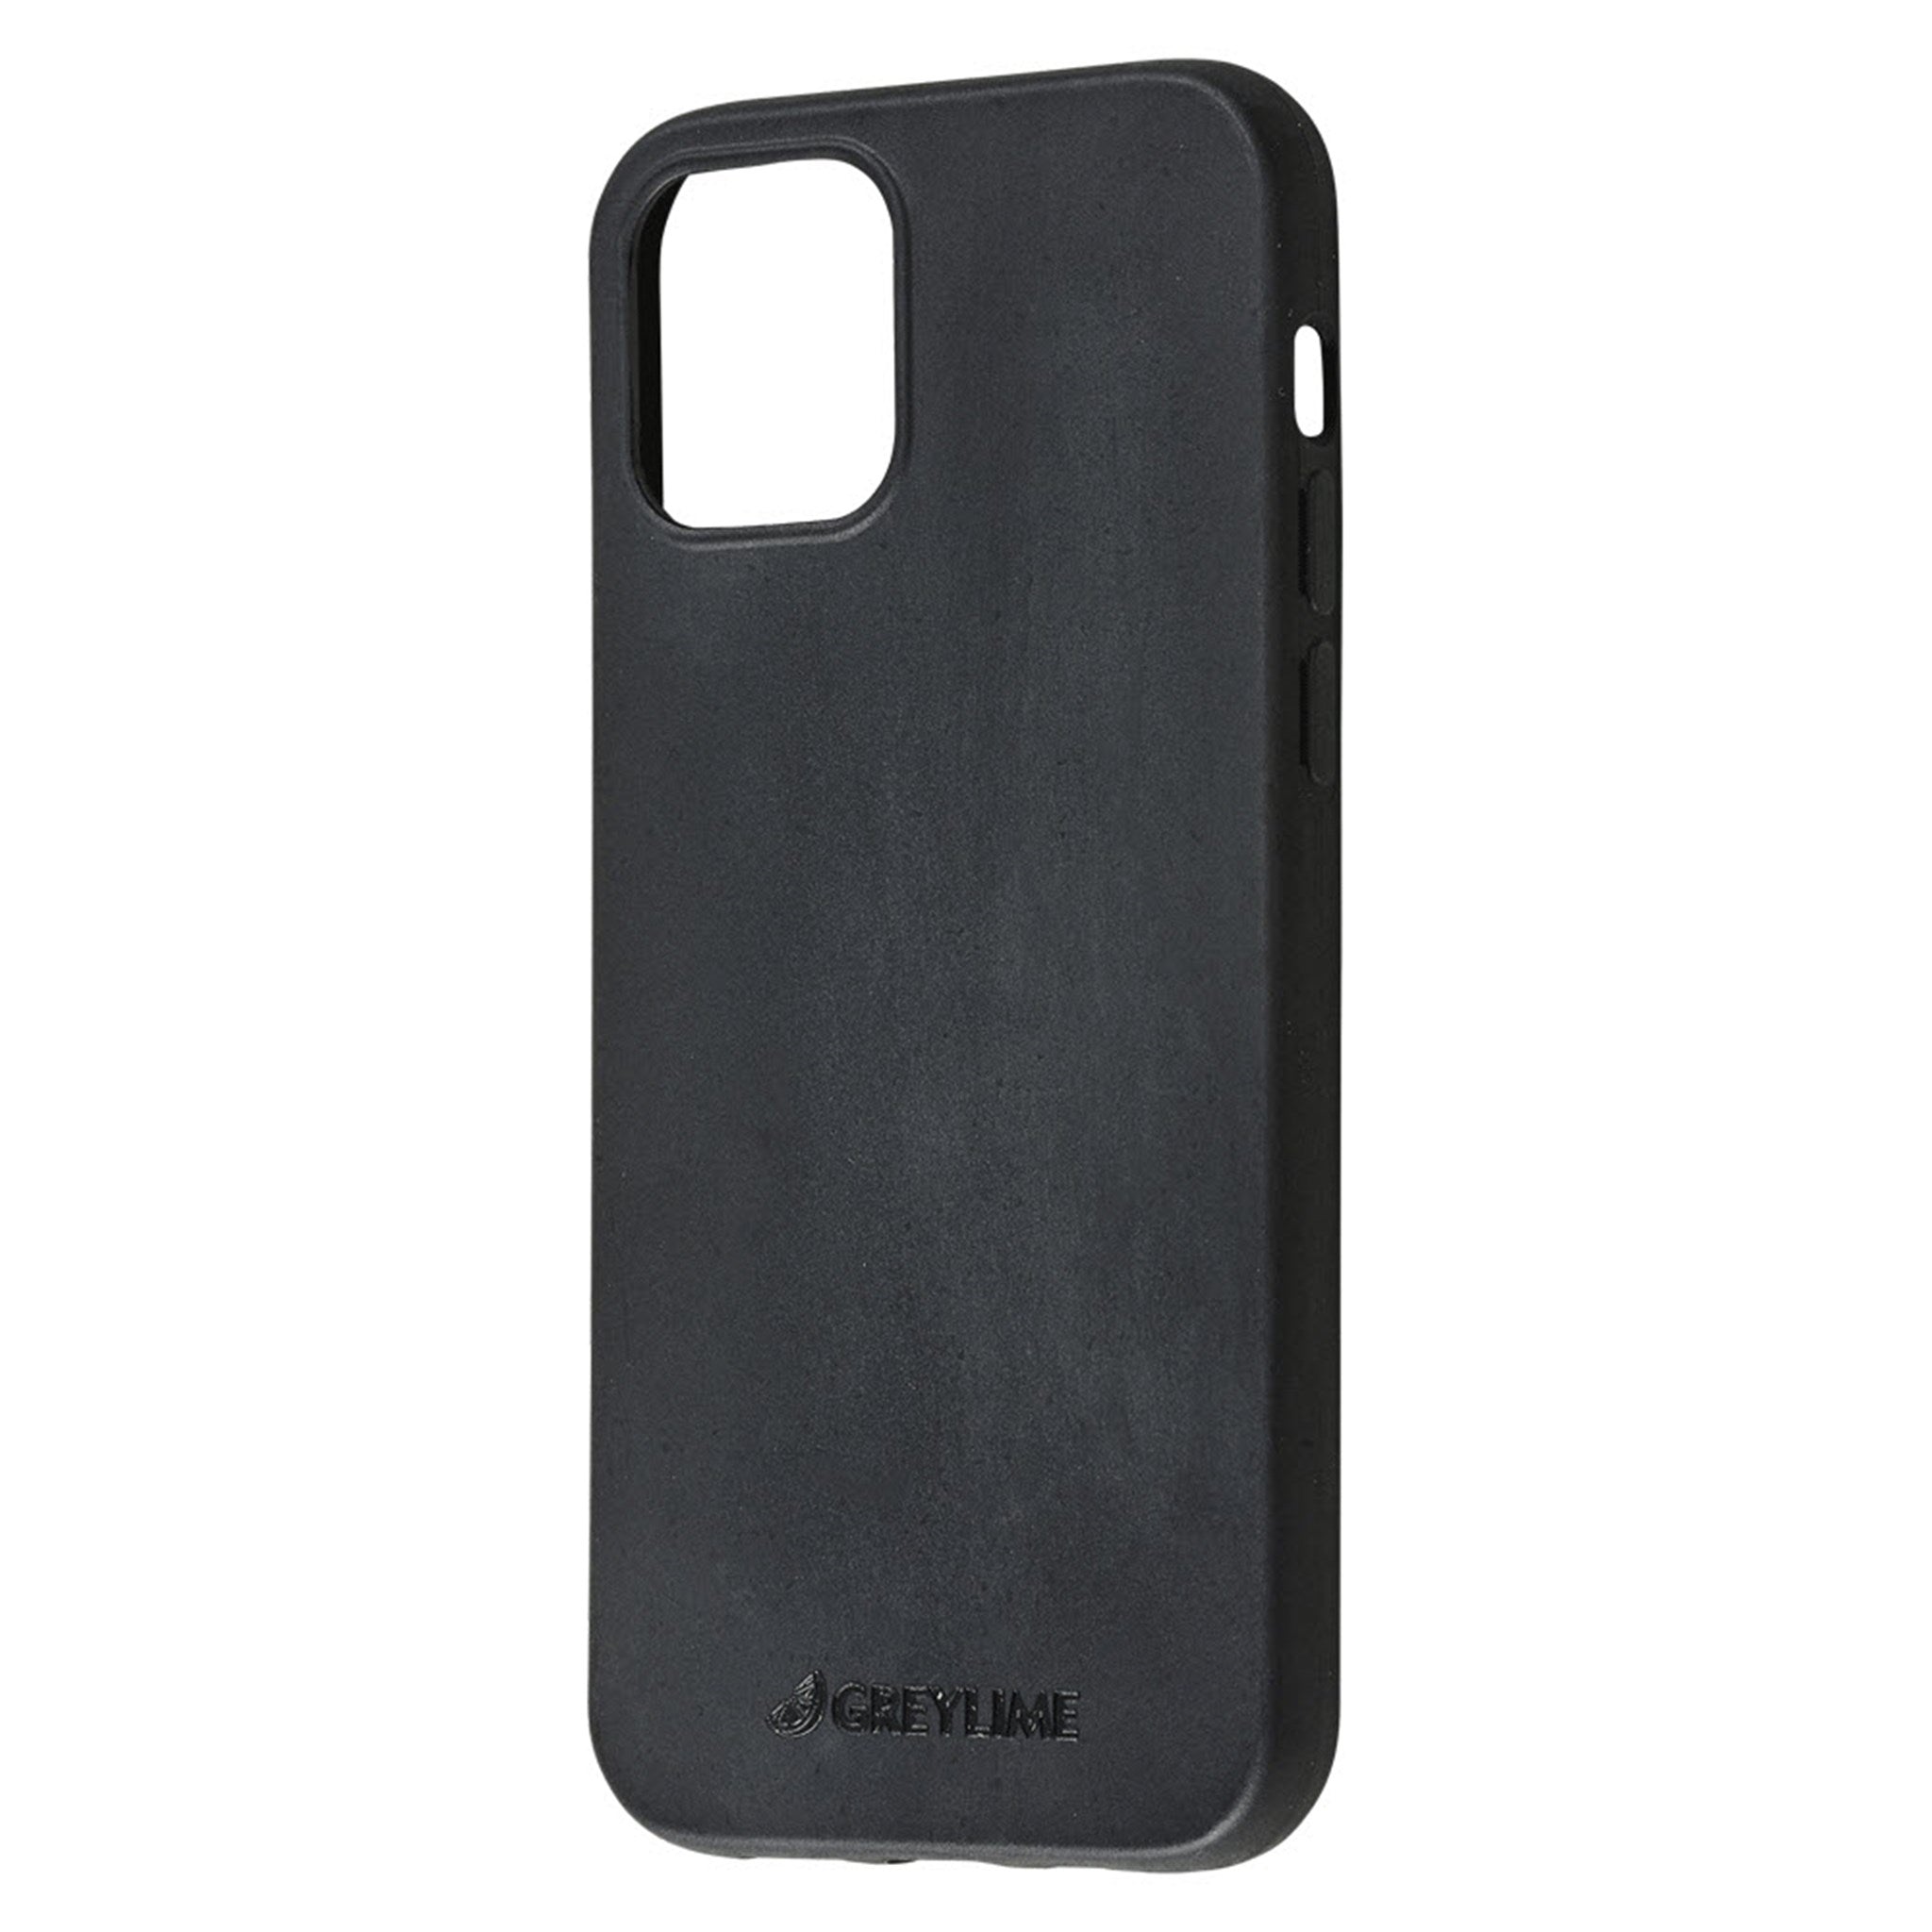 GreyLime-iPhone-12-12-Pro-Biodegdrable-Cover-Black-COIP12M01-V2.jpg